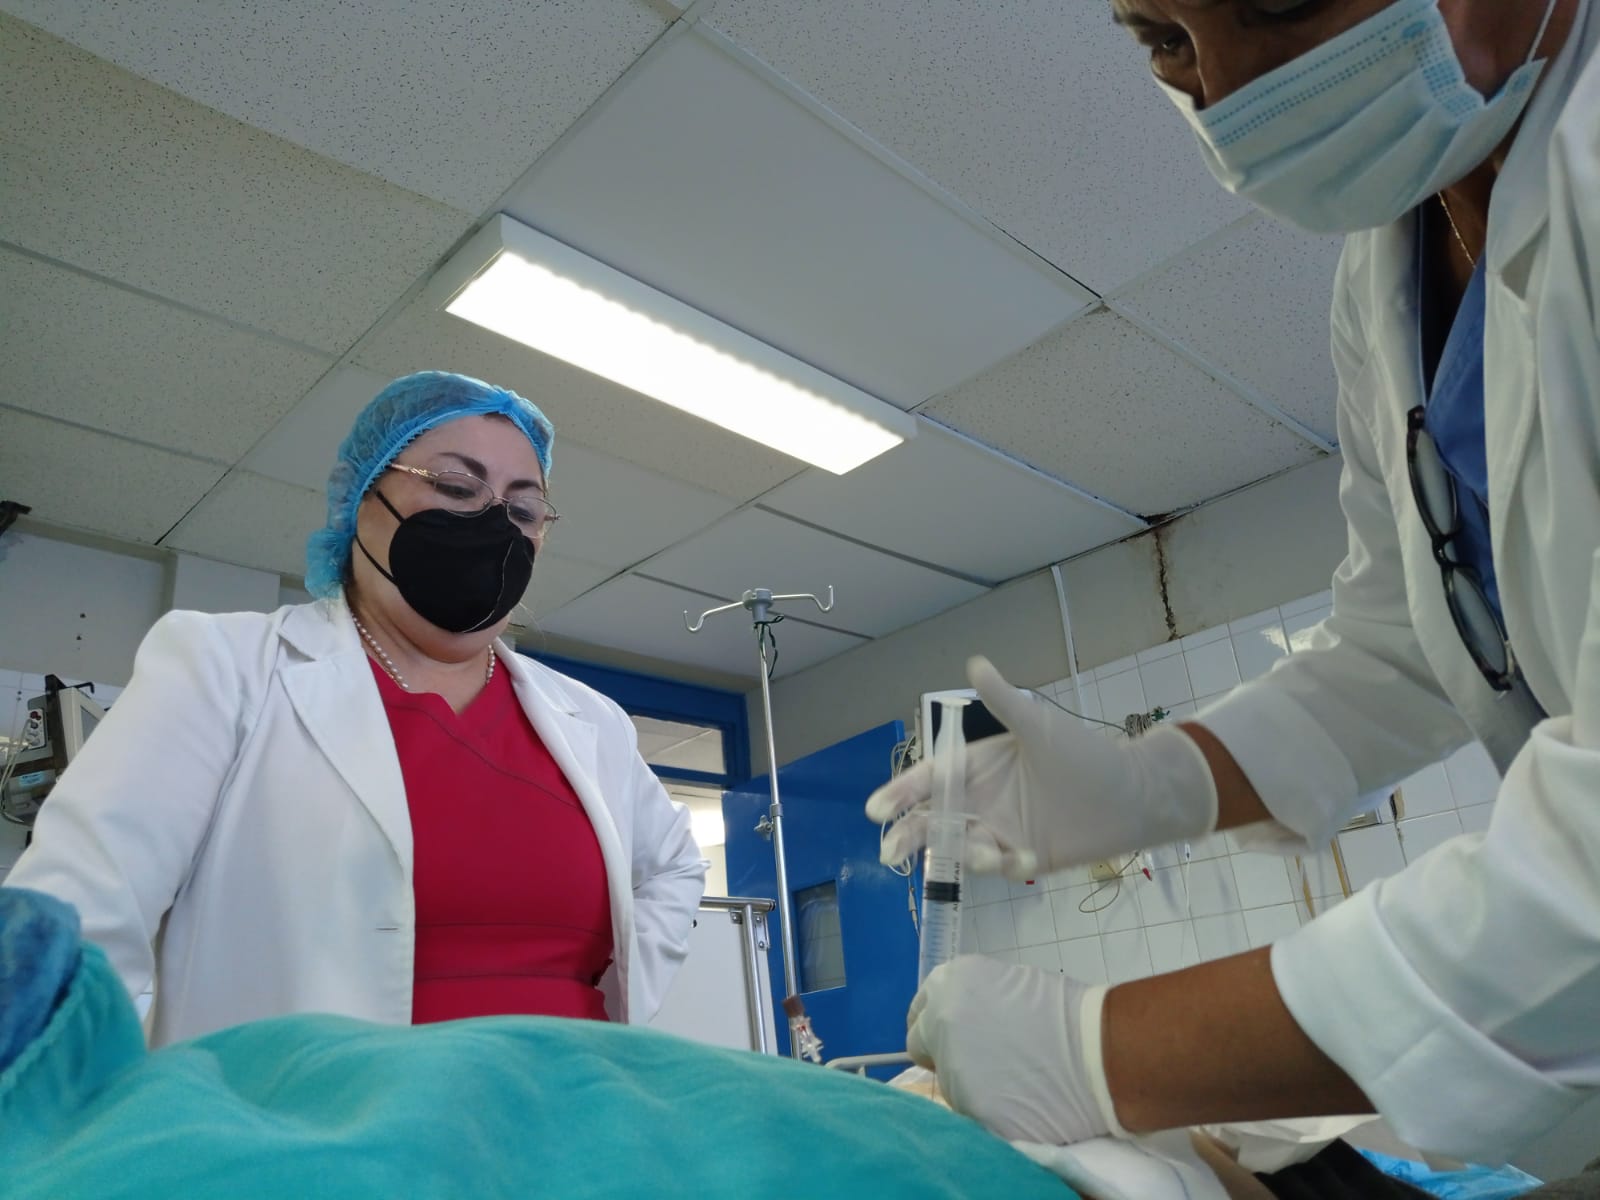 Essalud - Hospital Almanzor Aguinaga de EsSalud Lambayeque aplica ozonoterapia para eliminar dolor crónico articular